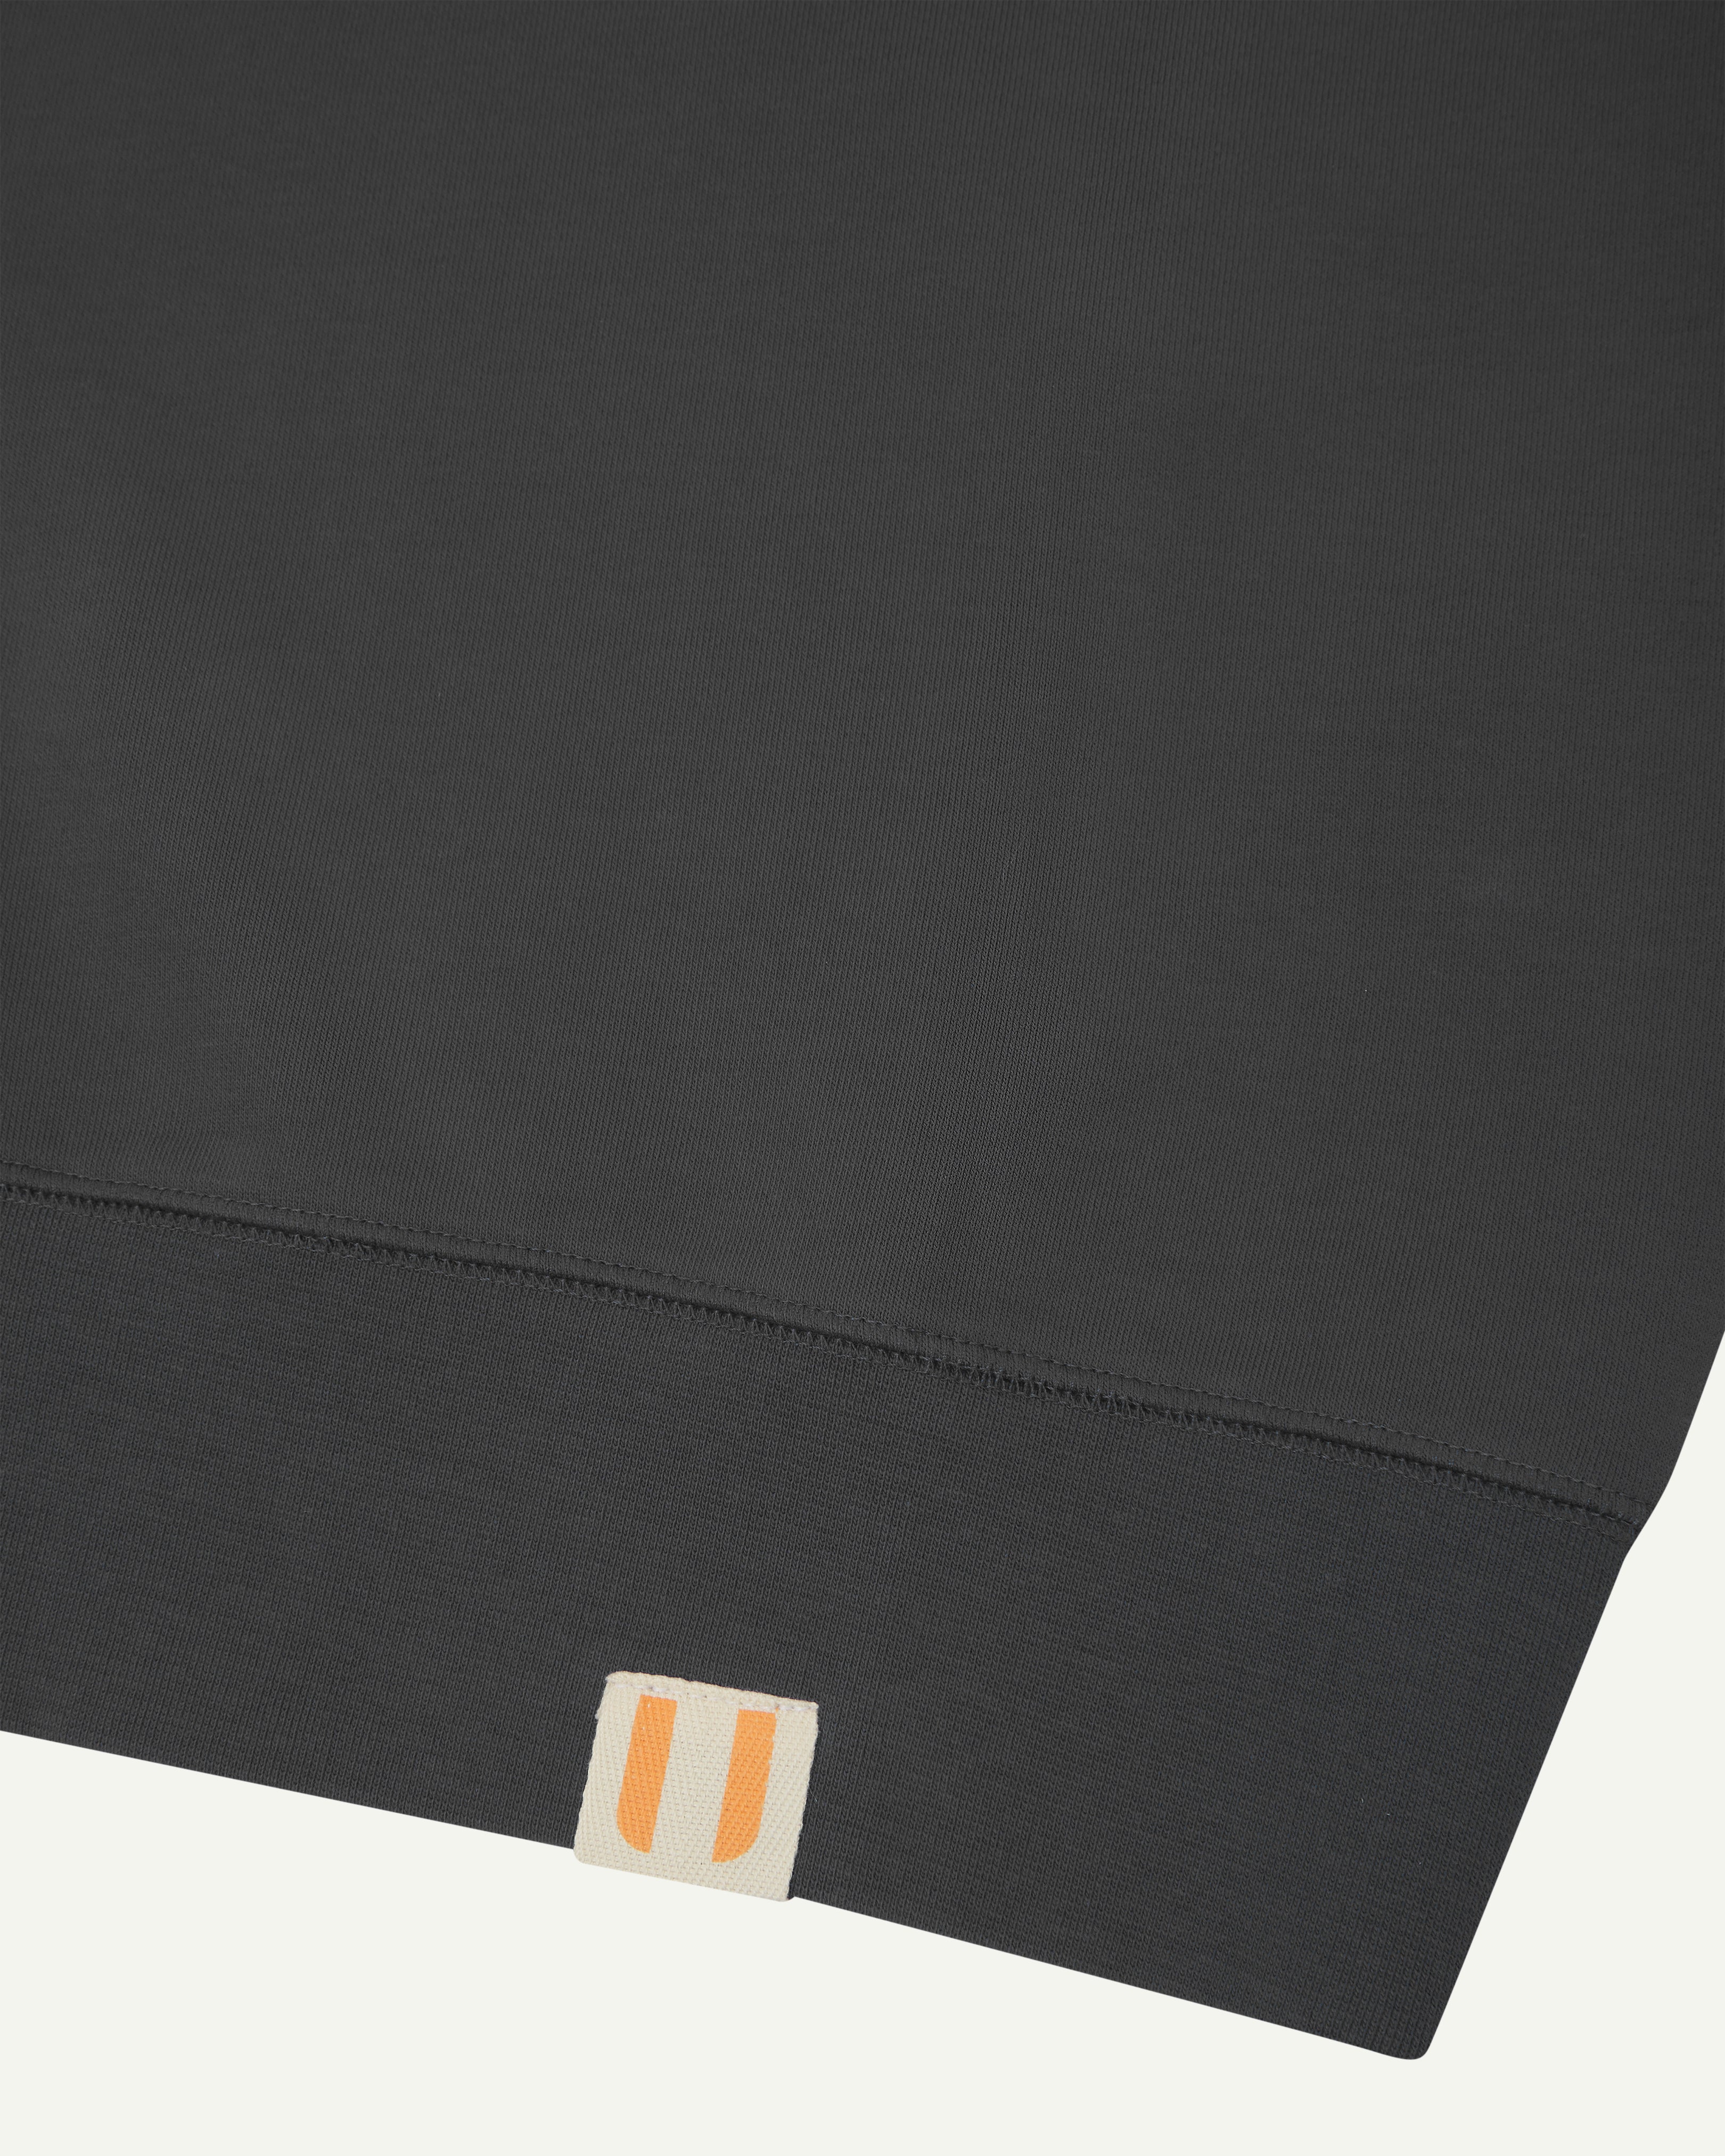 Close-up view of hem showing uskees logo label - dark grey organic heavyweight cotton #7005 sweatshirt for men.